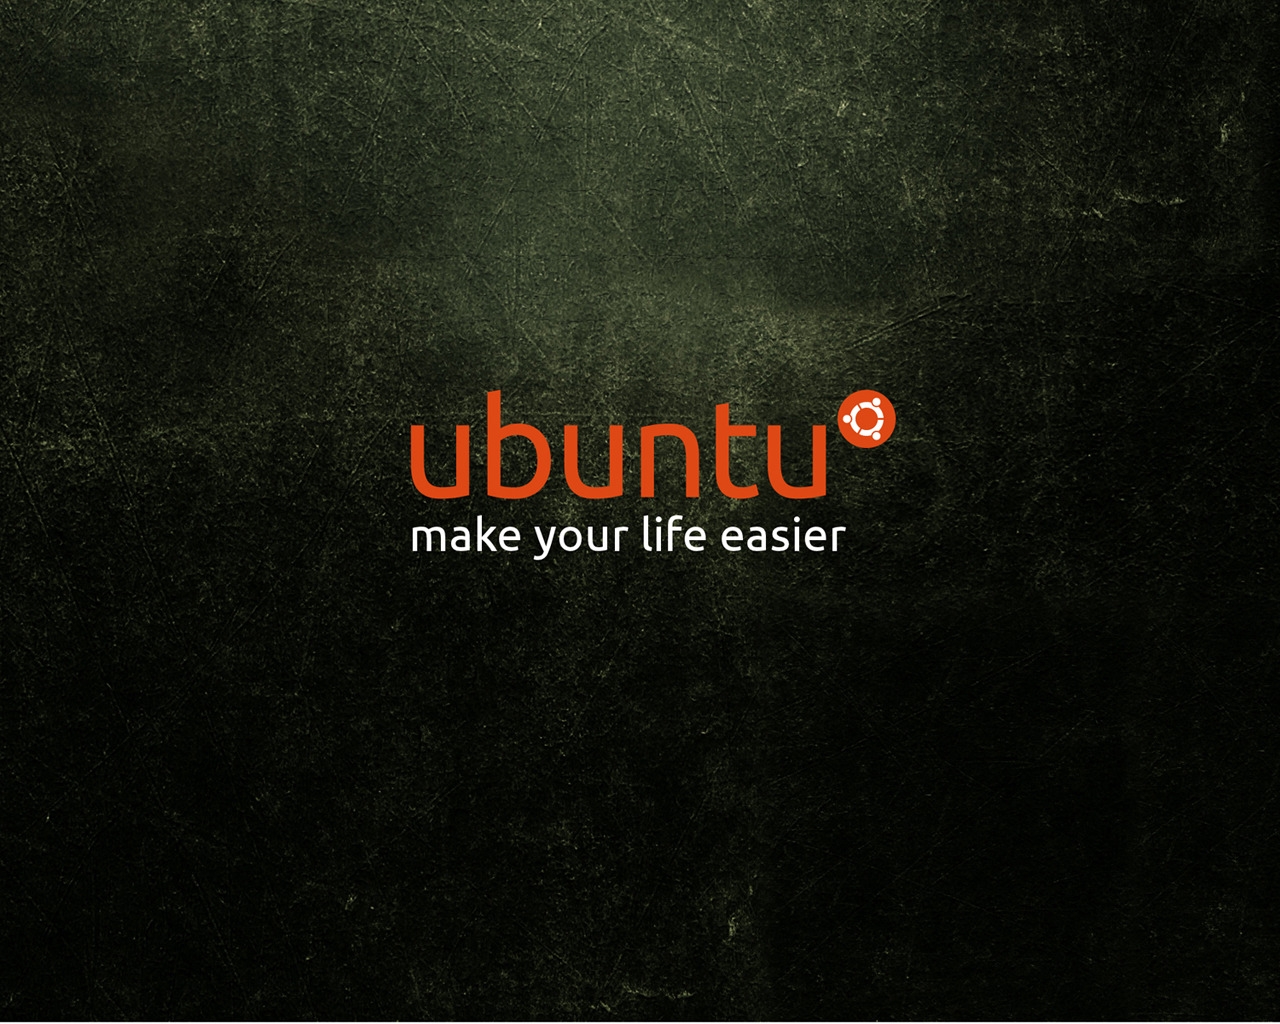 Ubuntu Life for 1280 x 1024 resolution